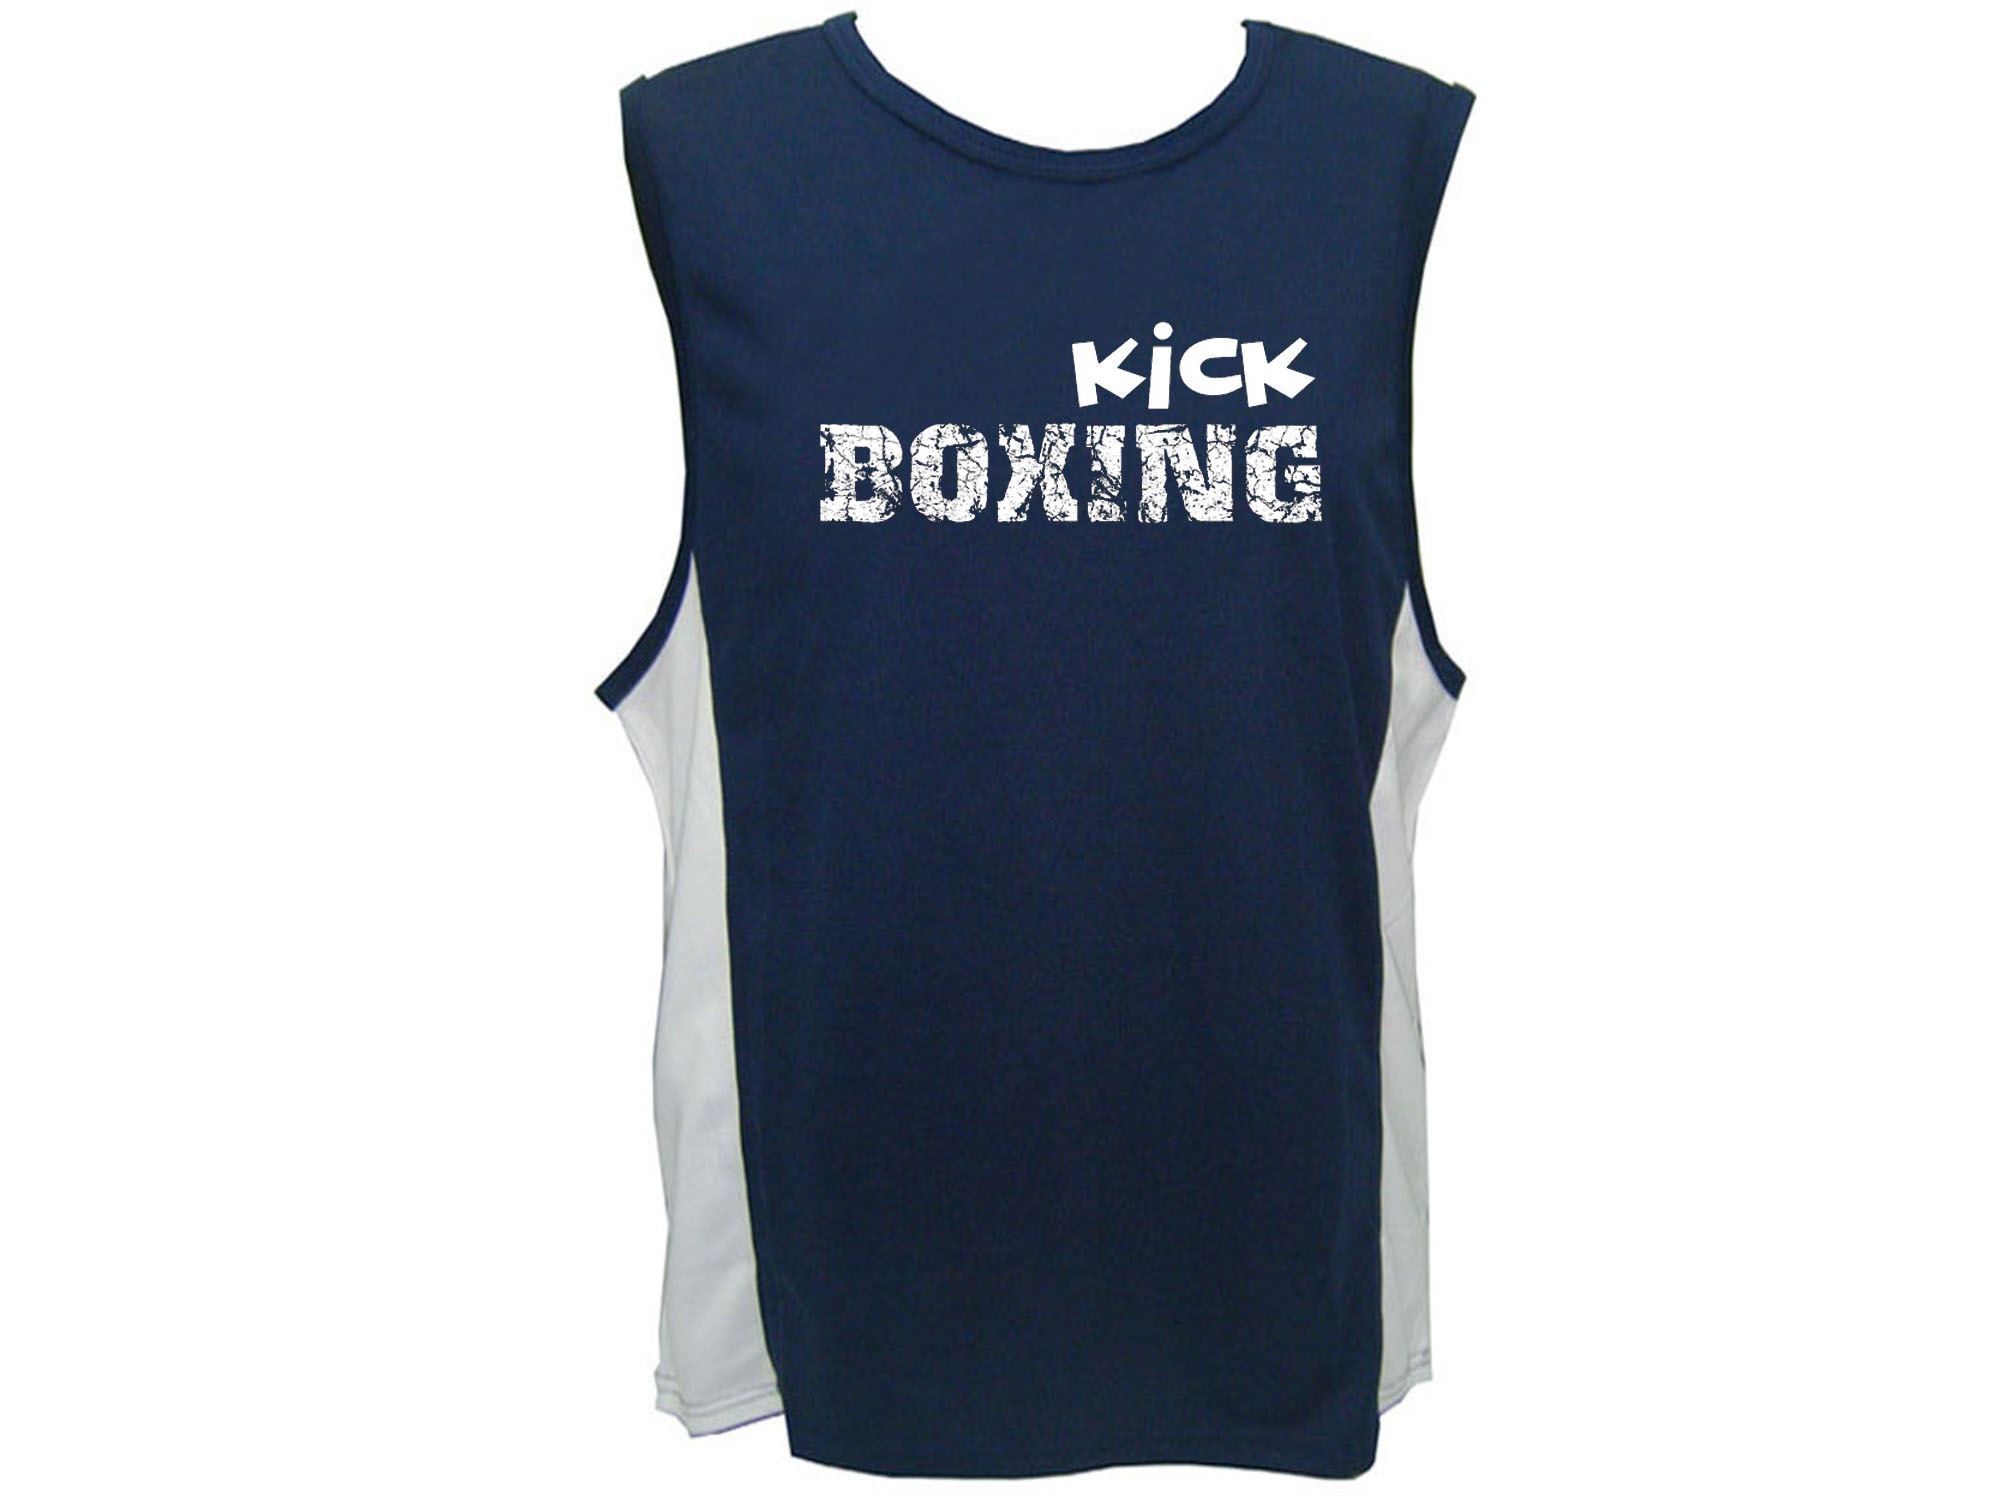 Kickboxing moisture wicking workout sports tank top